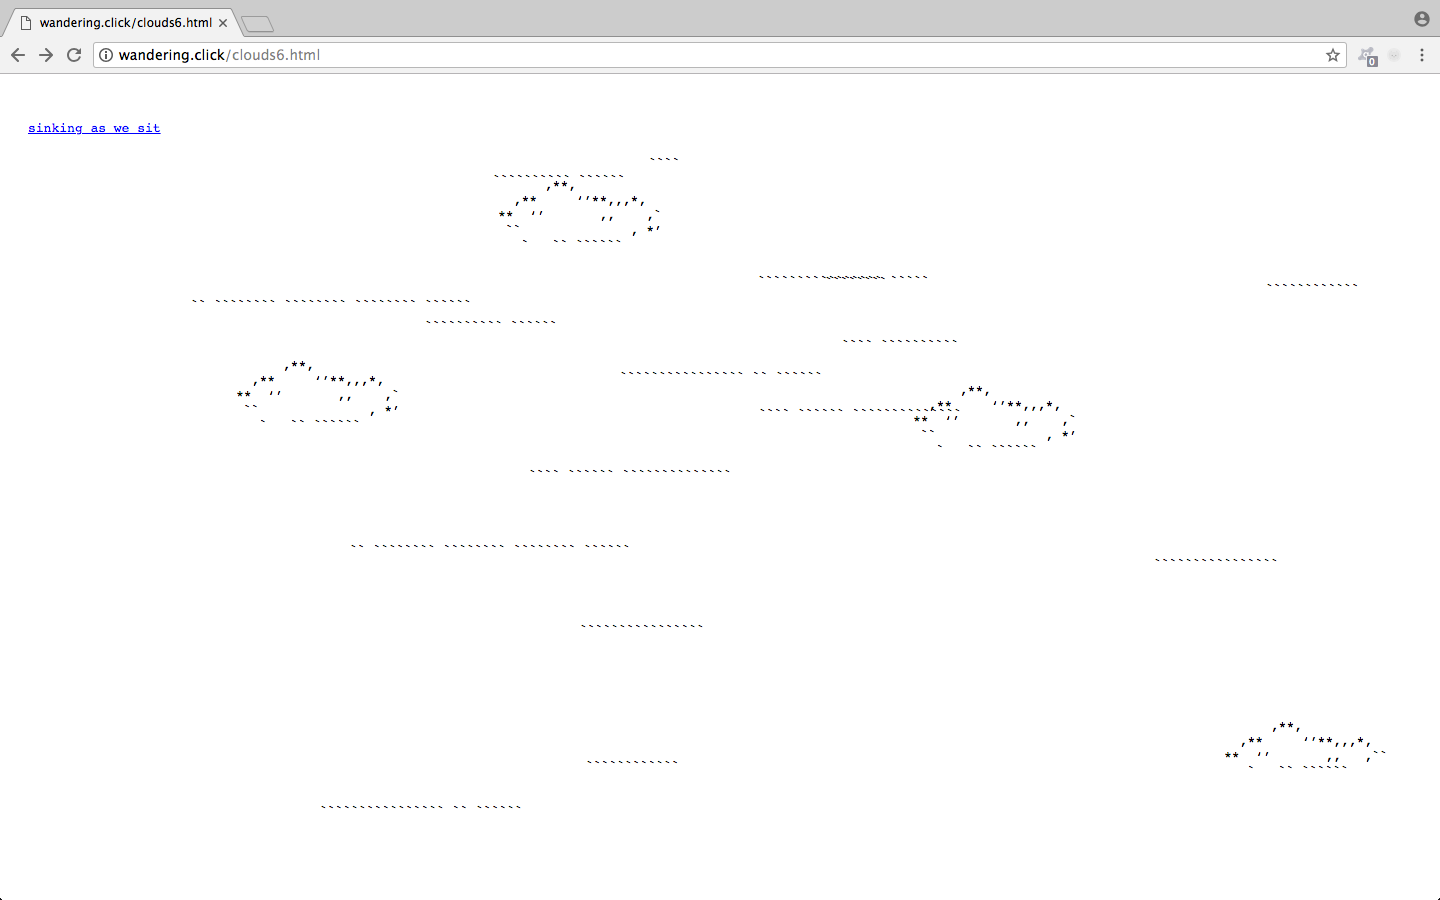 View full size version of a screenshot of ASCII clouds